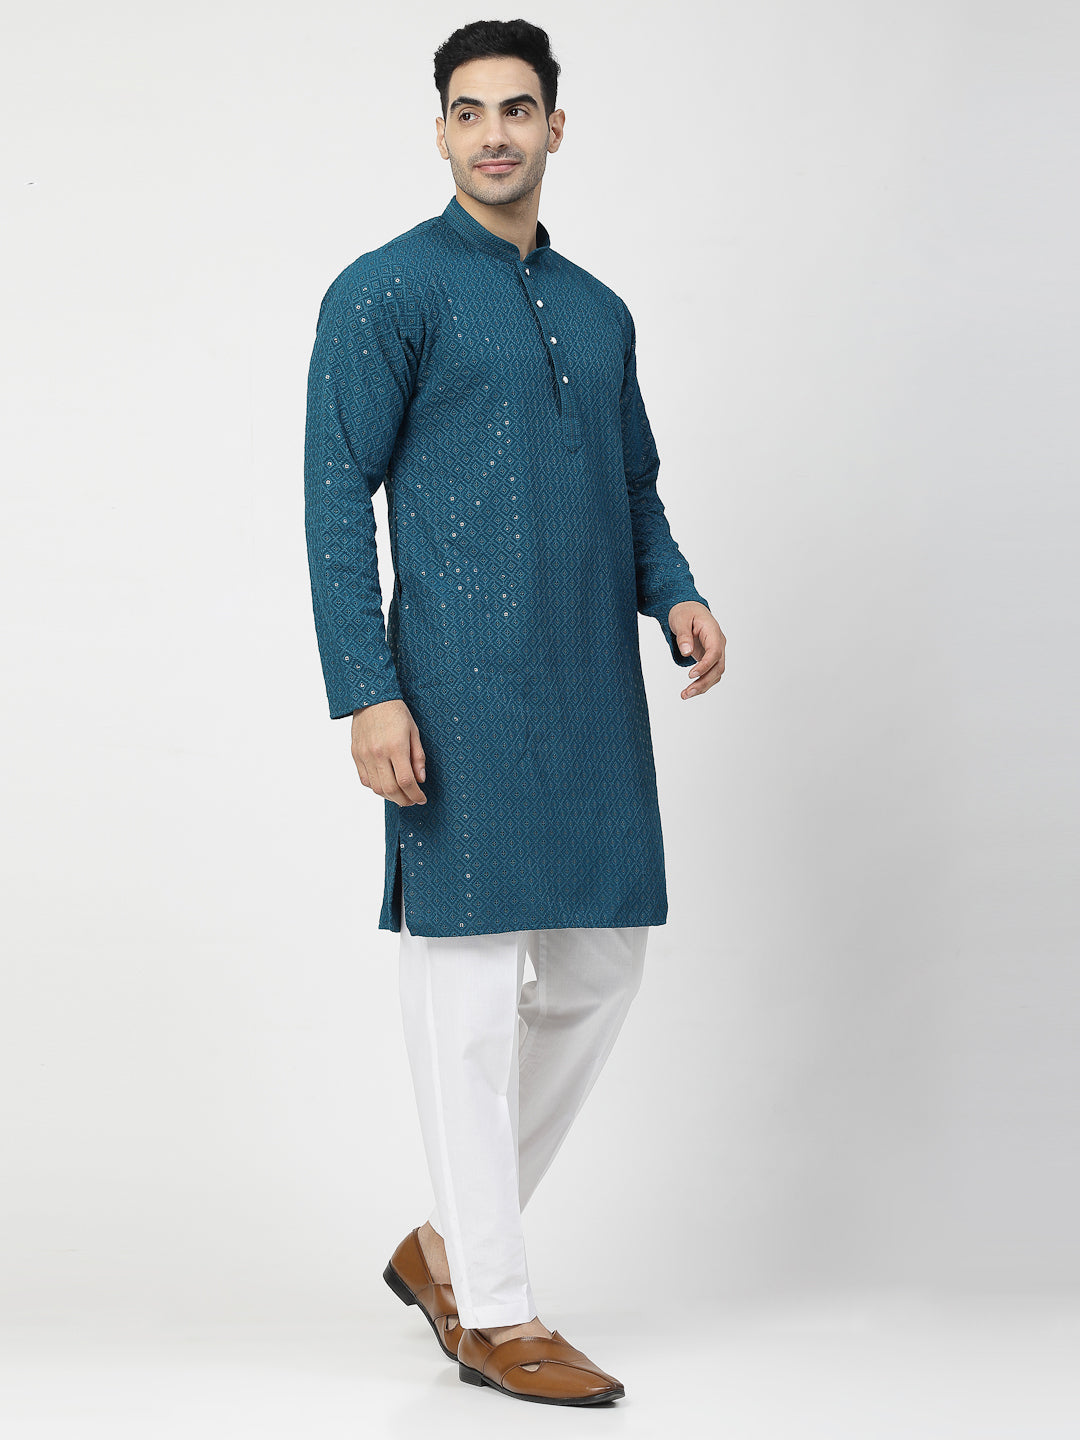 Men's Embroidery Cotton Blend Chikankari Kurta Set with White Pyjama (Teal Blue Color)